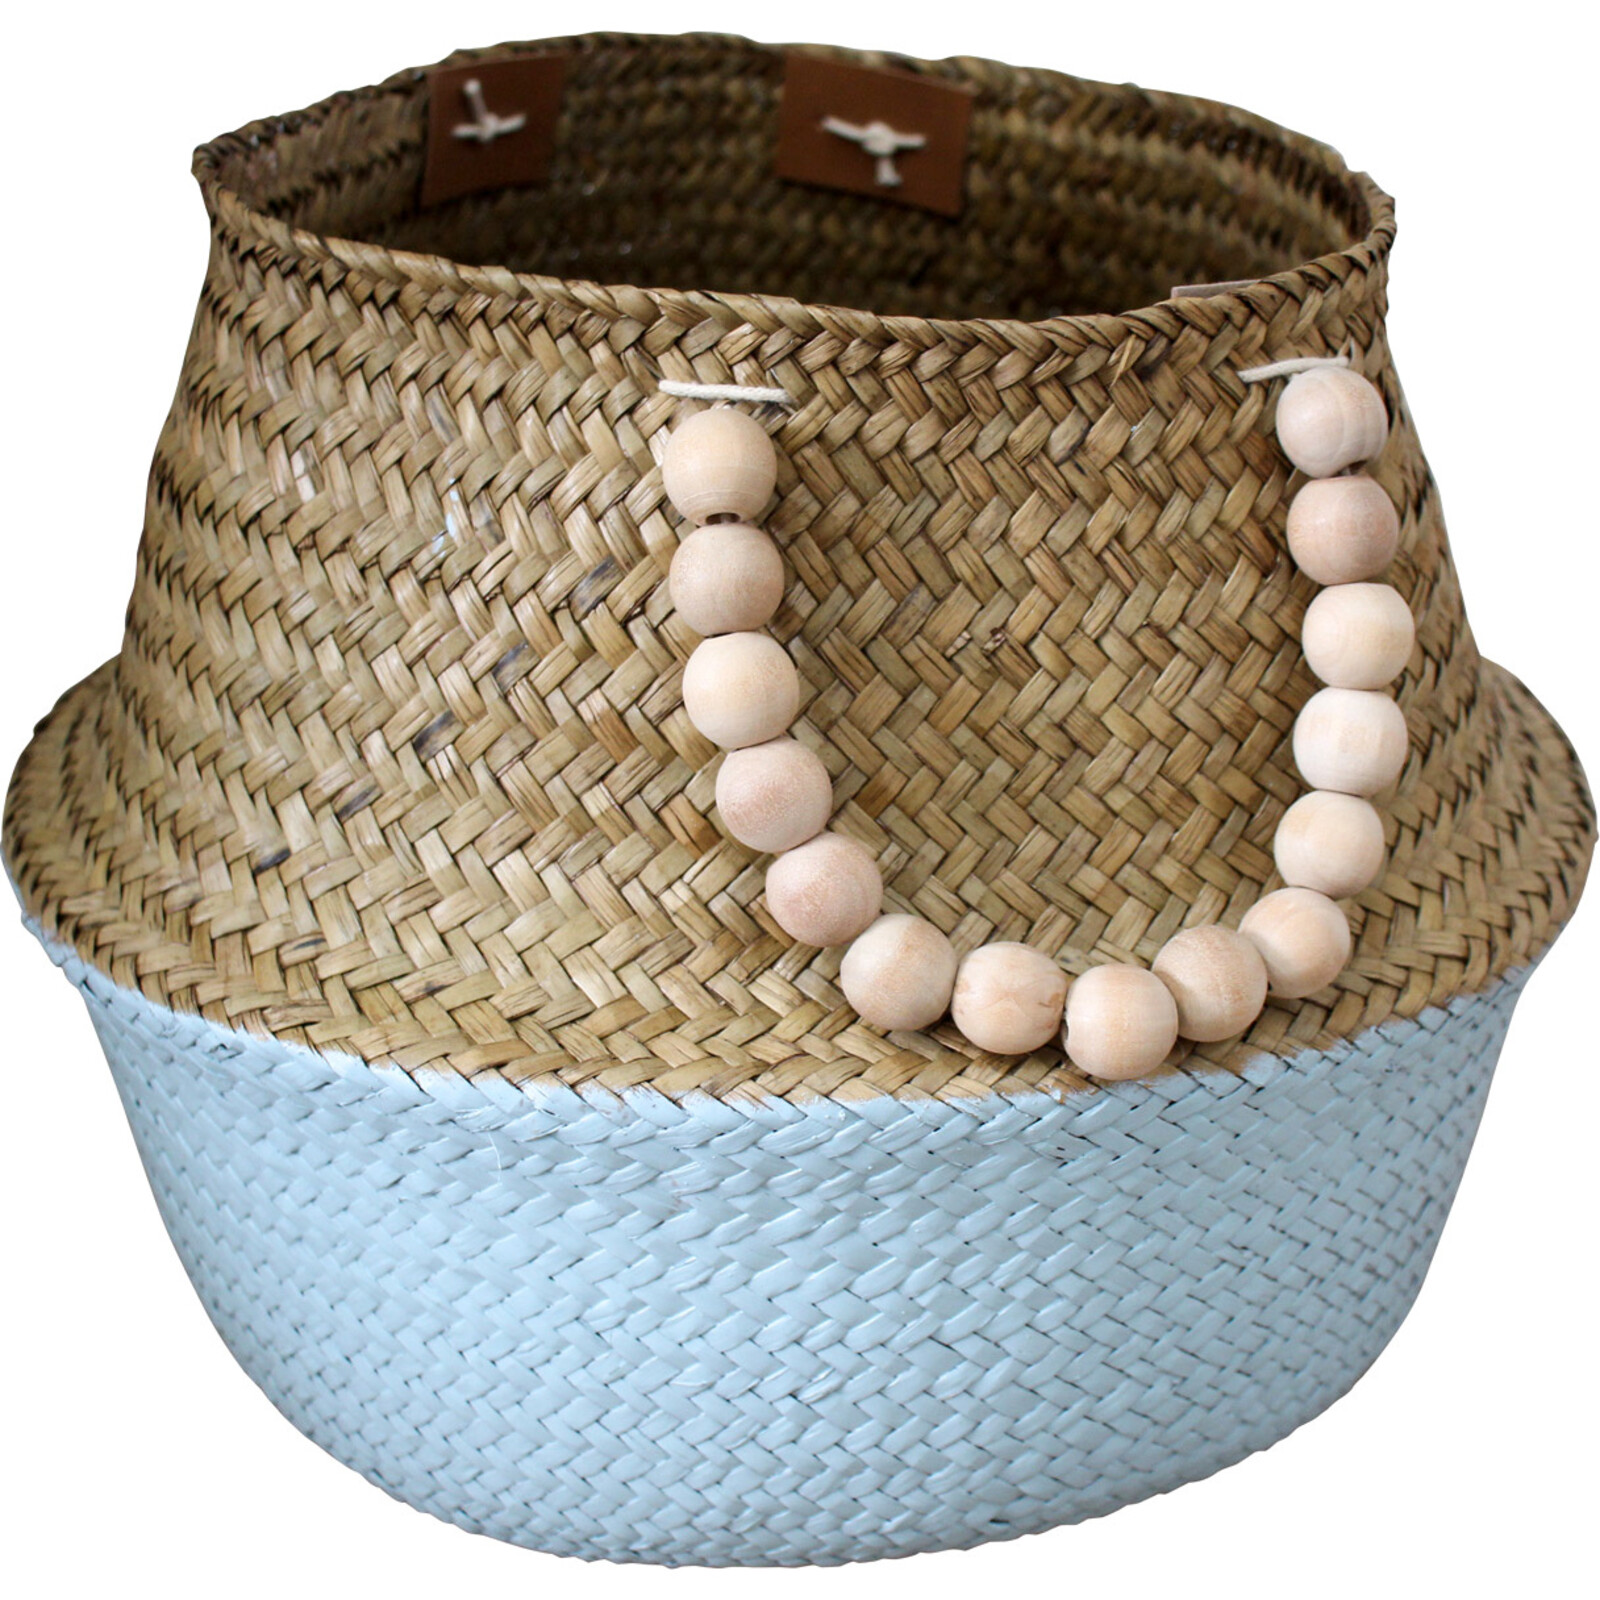 Belly Basket Sky/Beads